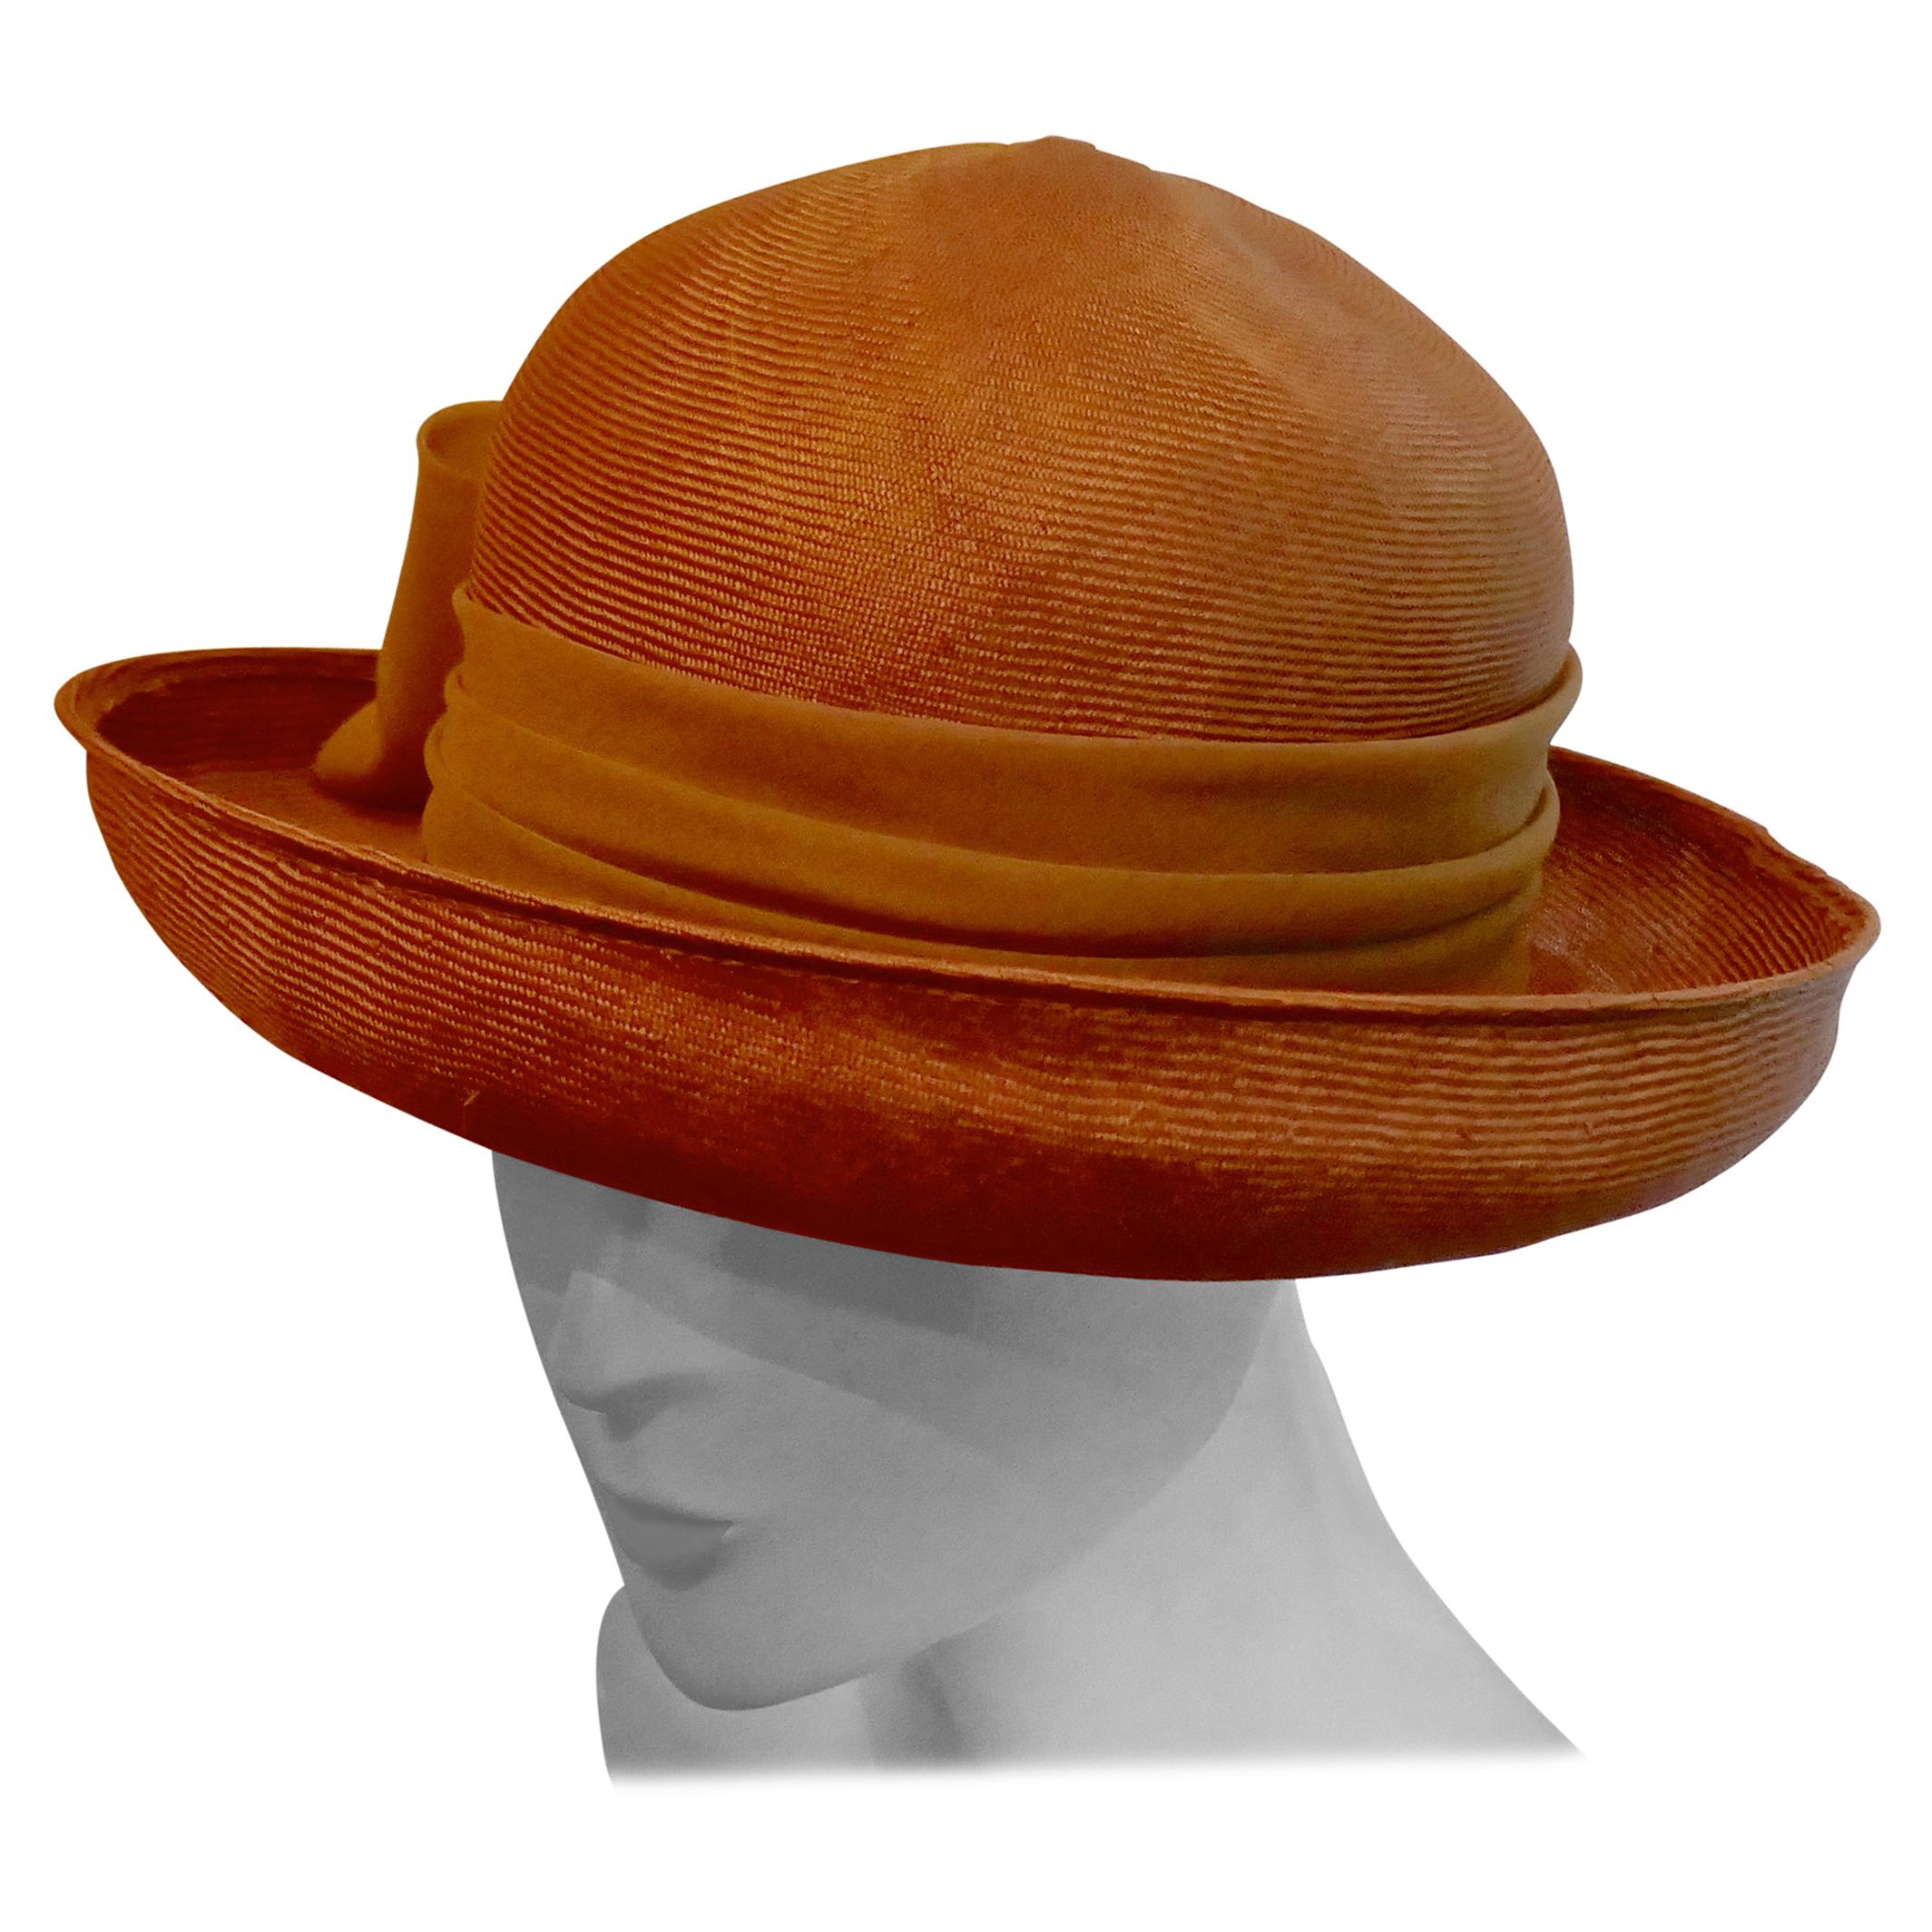 Original 1960s Copper Coloured Panama Cloche Style Hat, trimmed with Chiffon